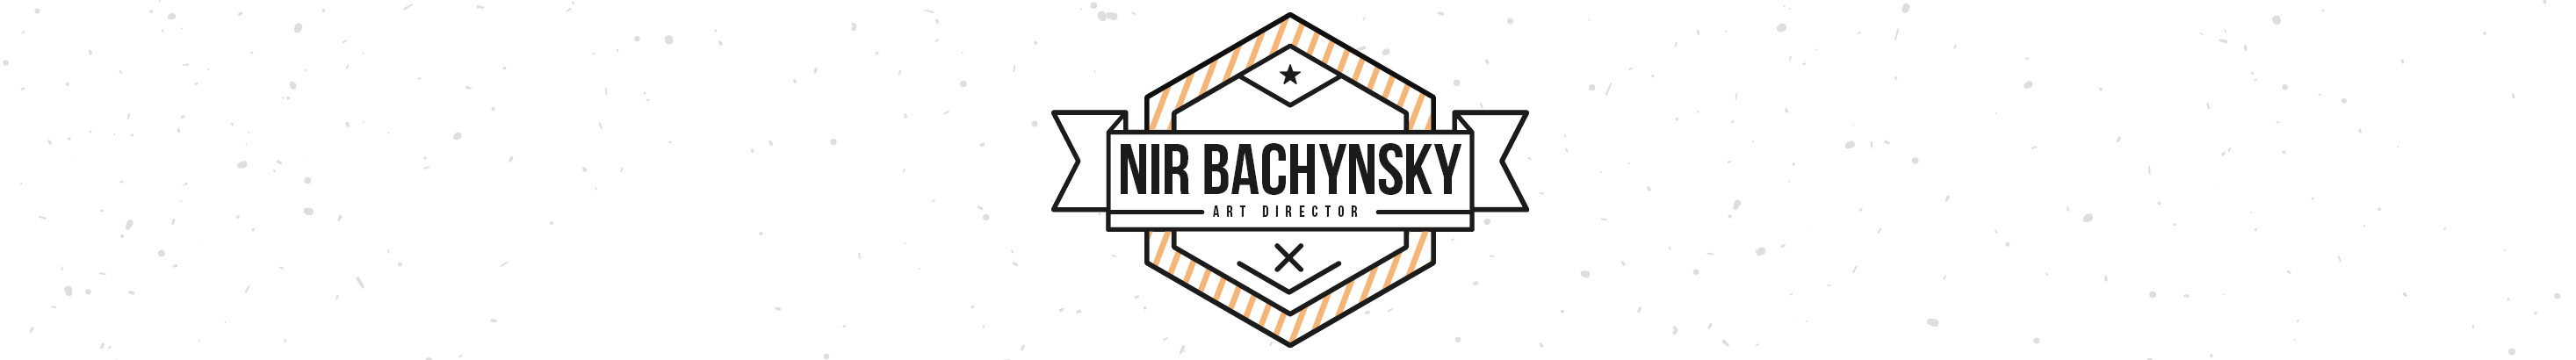 Nir Bachynsky's profile banner